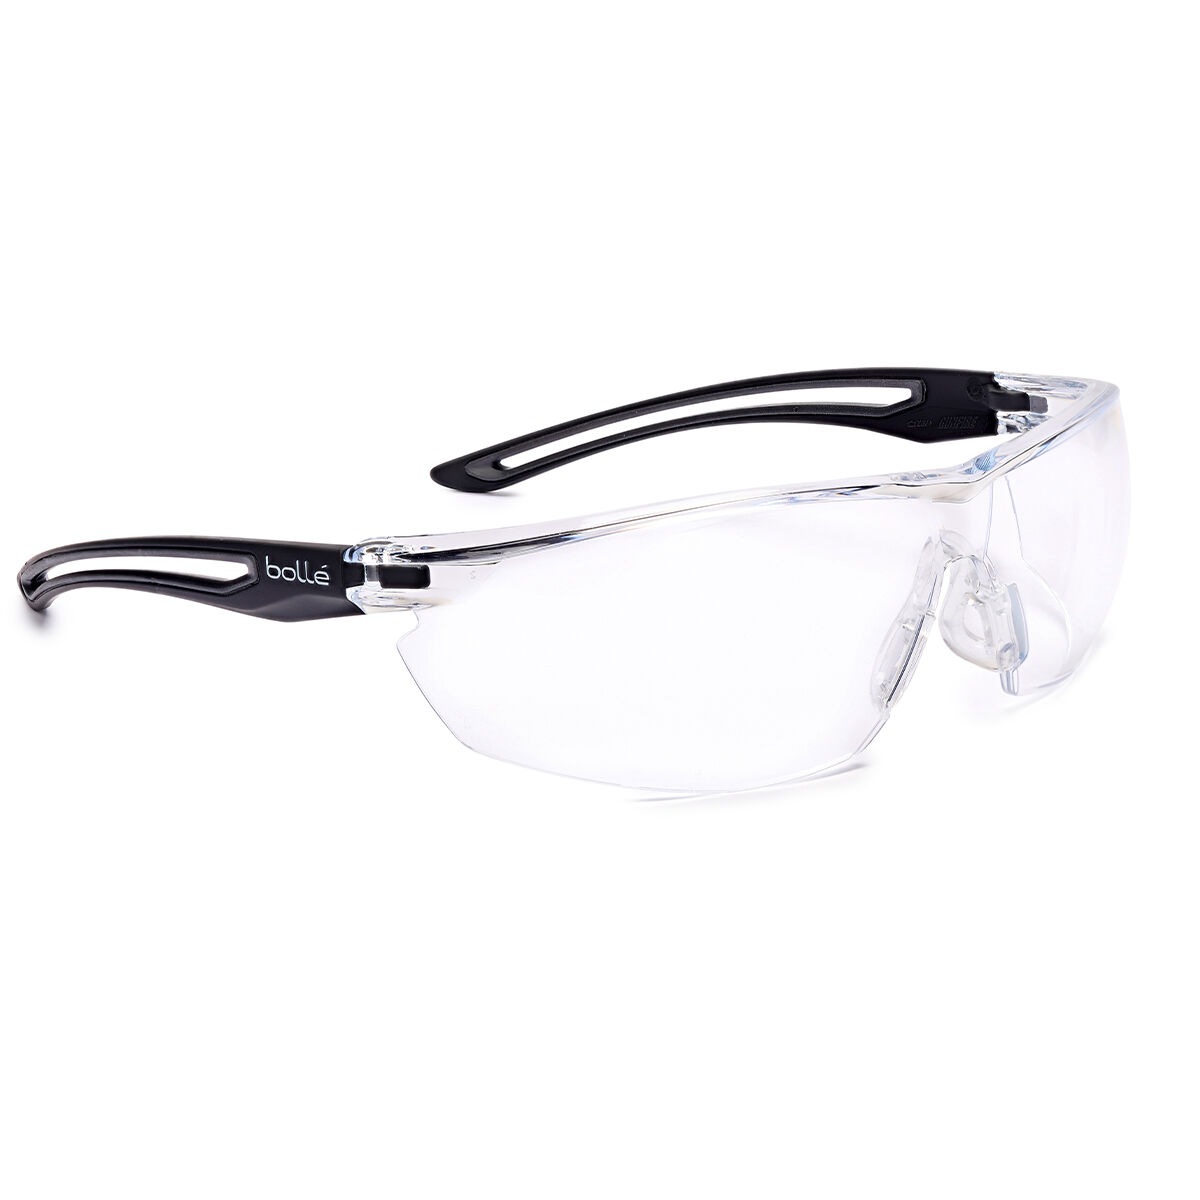 Bolle Bolle Gunfire Ballistic Glasses Kit Eye Protection Wrap Around Polycarbonate 3660740007843 